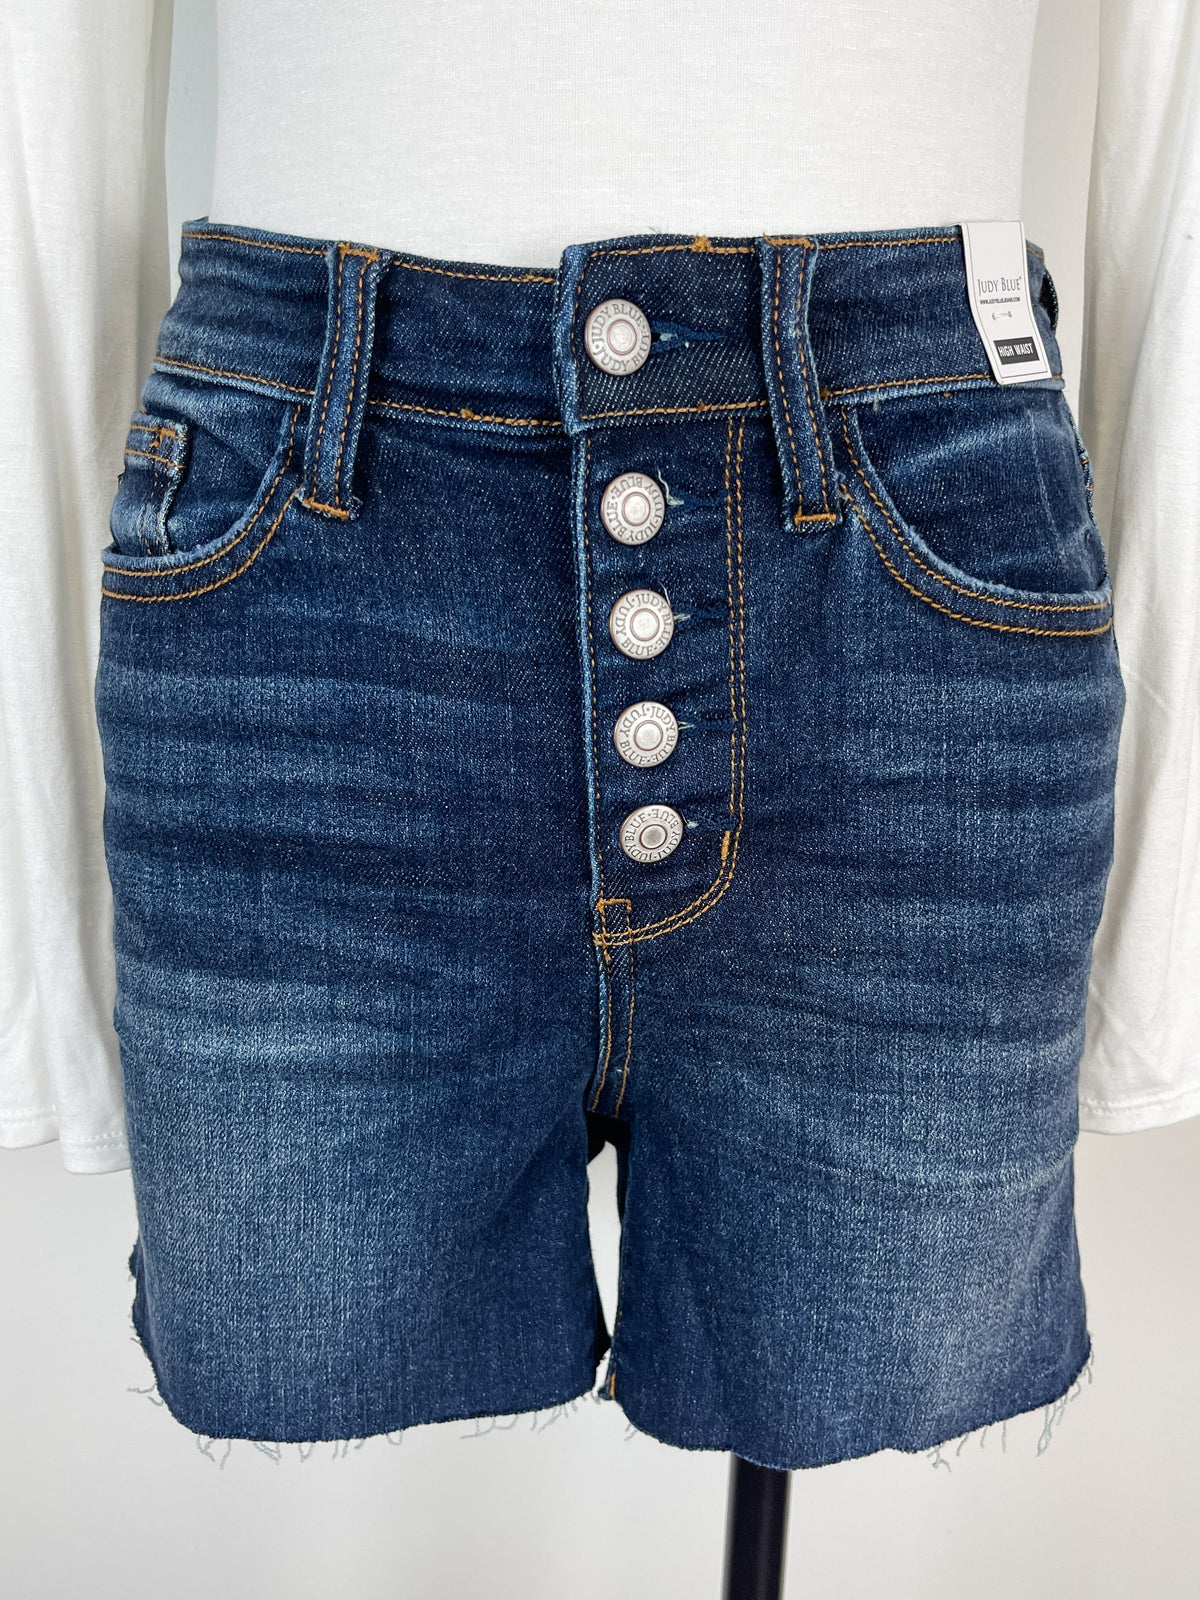 Judy Blue High Waist Button Fly Cut Off Shorts in Super Dark